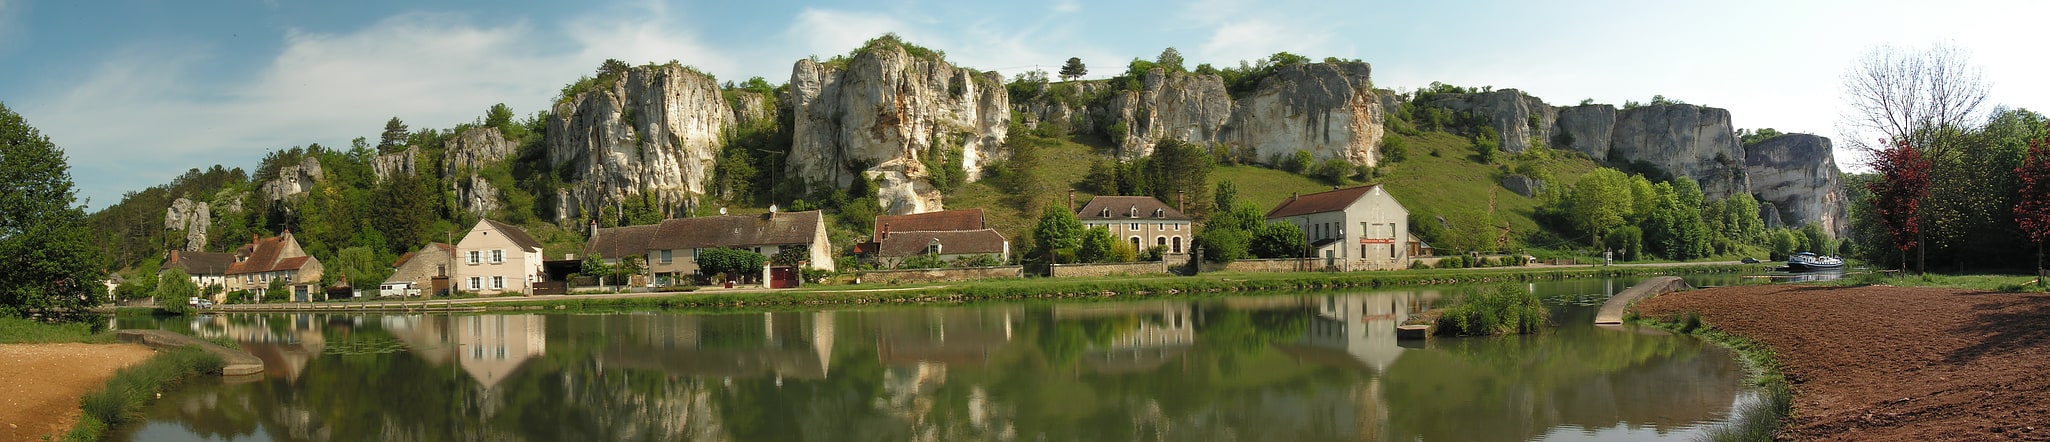 Merry-sur-Yonne, Francja